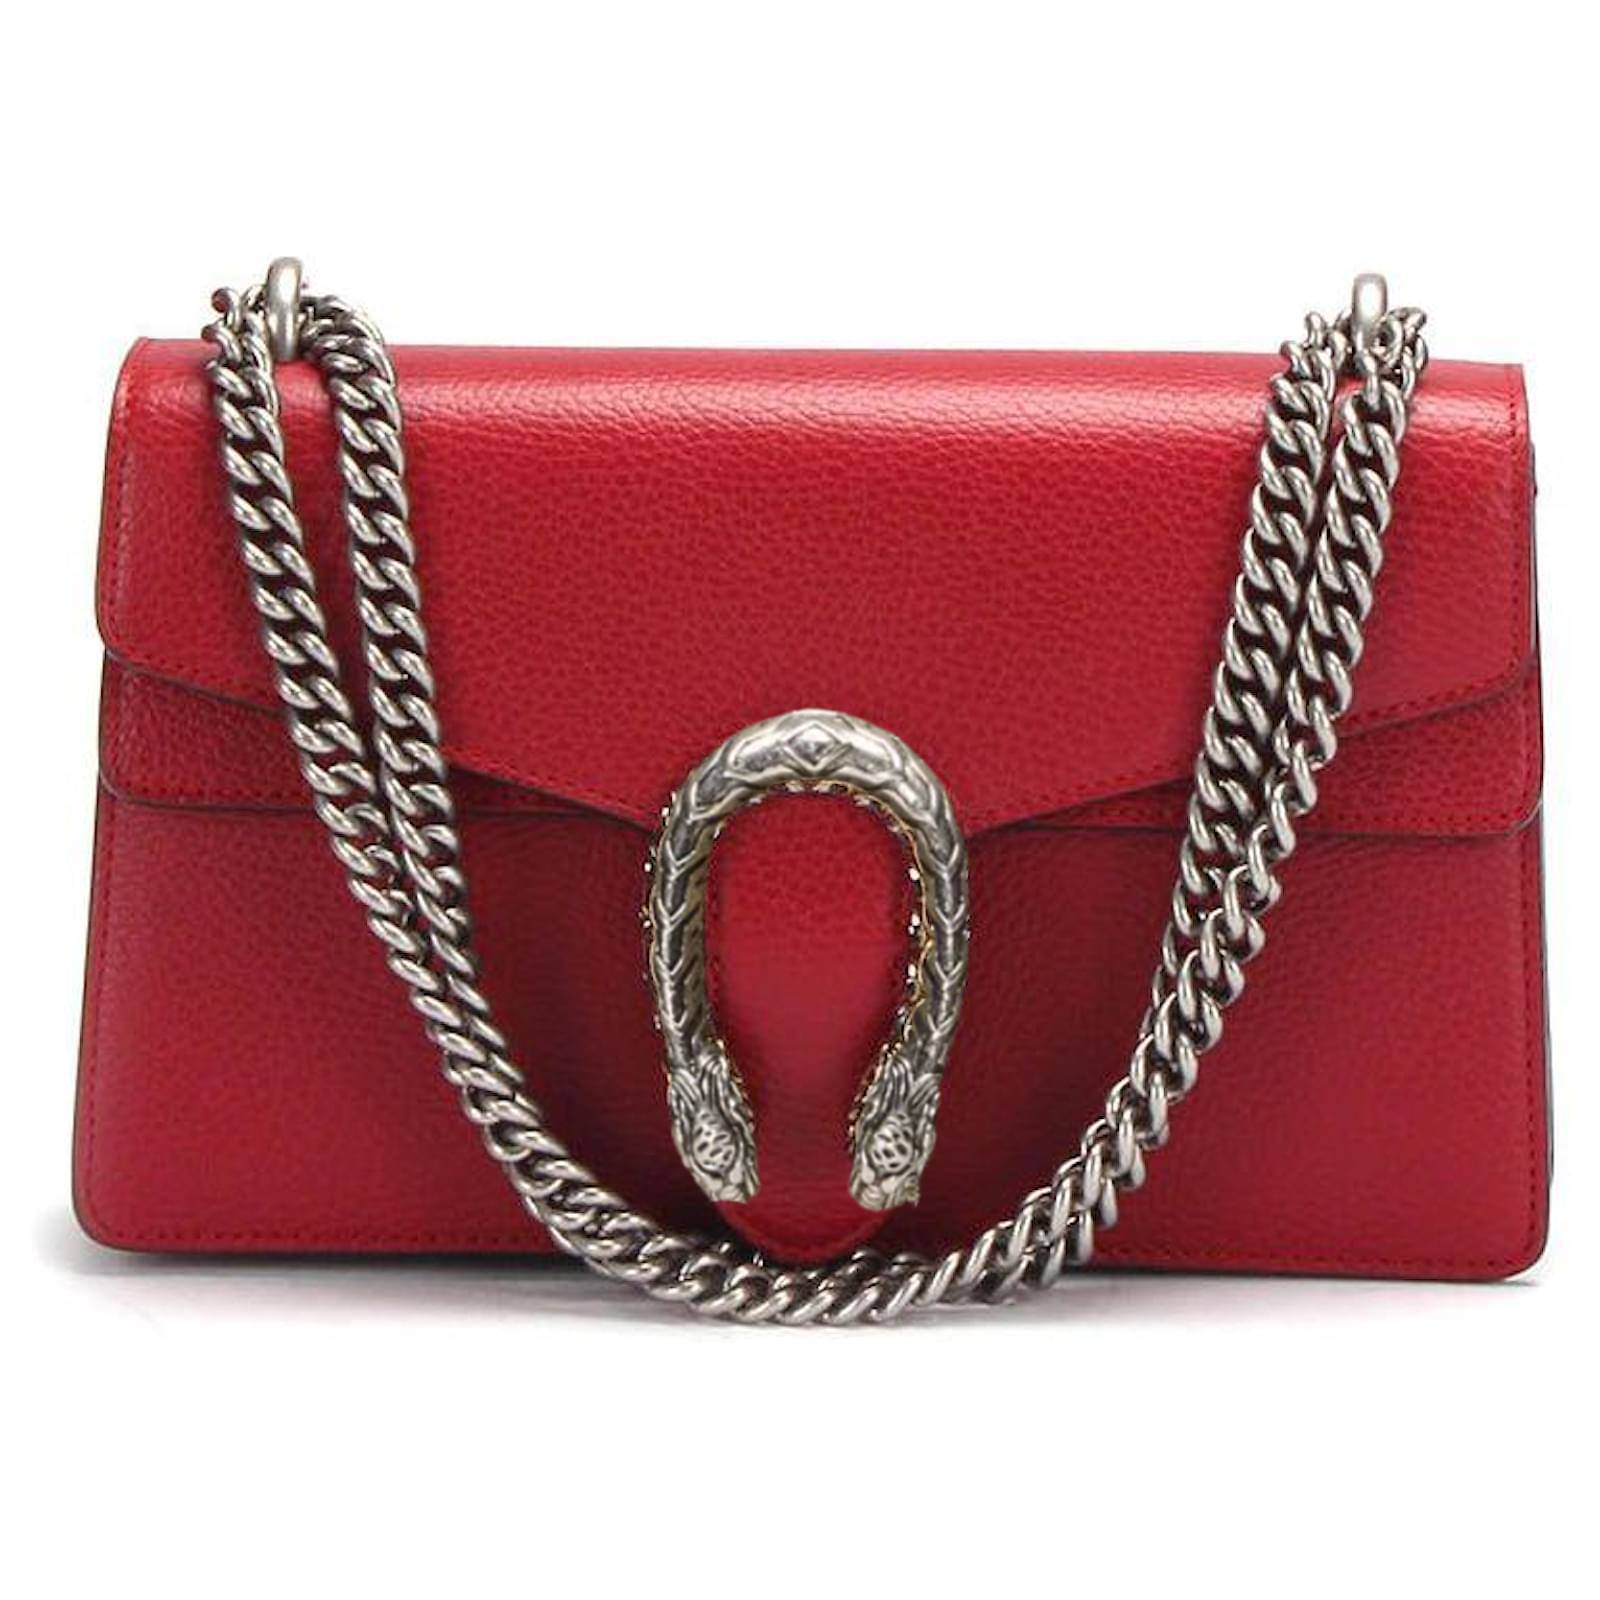 Gucci Dionysus Shoulder Bag Red - Oh My Handbags